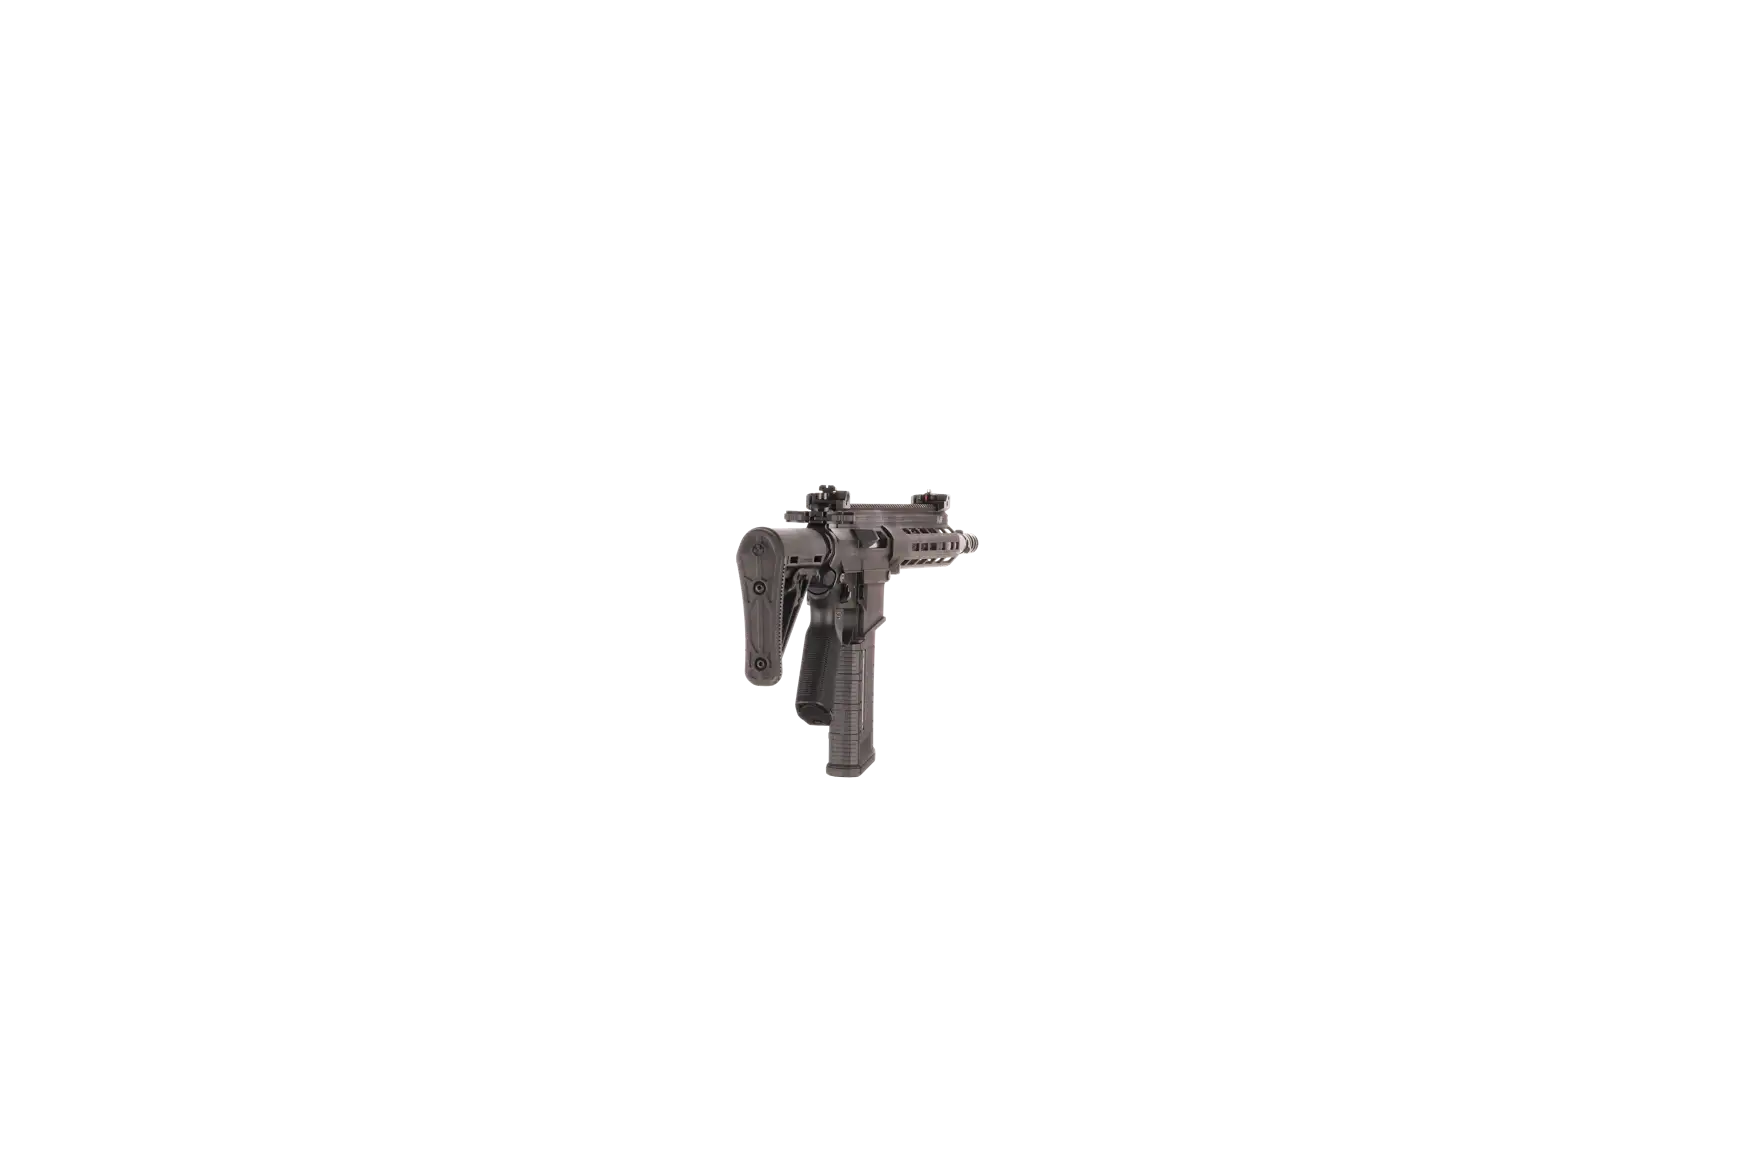 Náhledový obrázek pušky V-AR 762 x 45mm SPINVIEW 1 R57